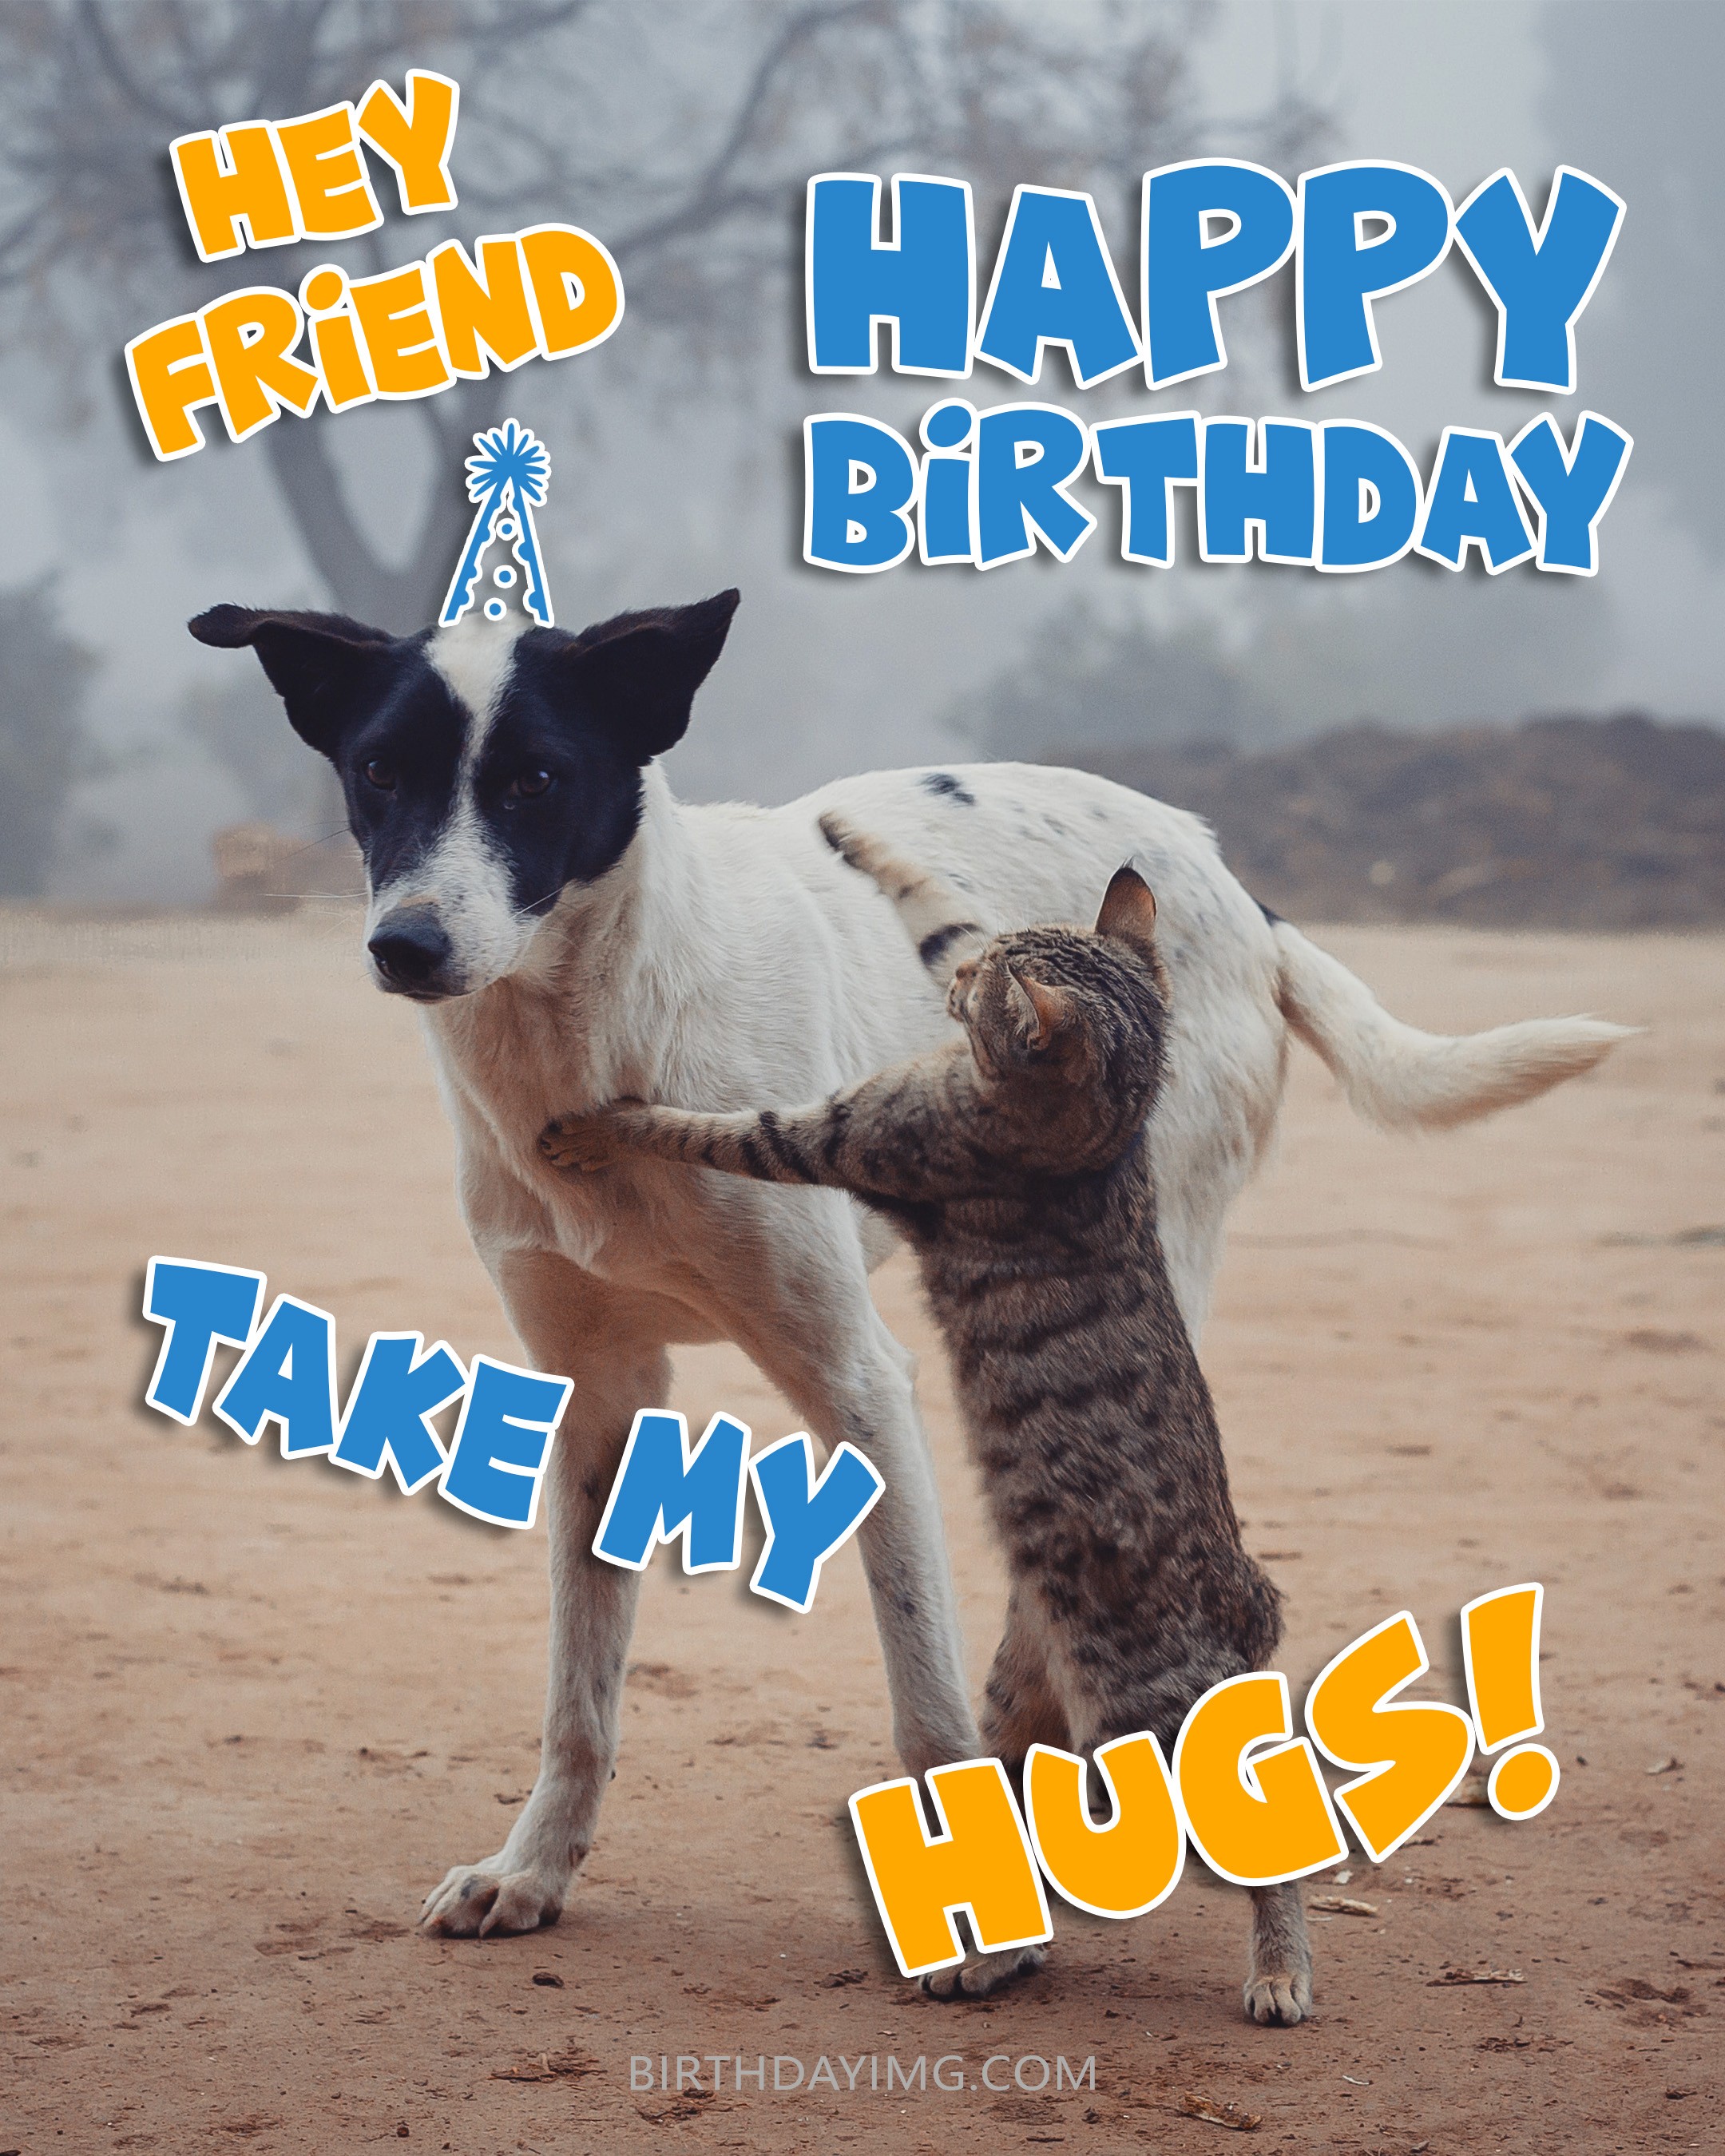 Free Friend Happy Birthday Image With Funny Cat And Dog - birthdayimg.com